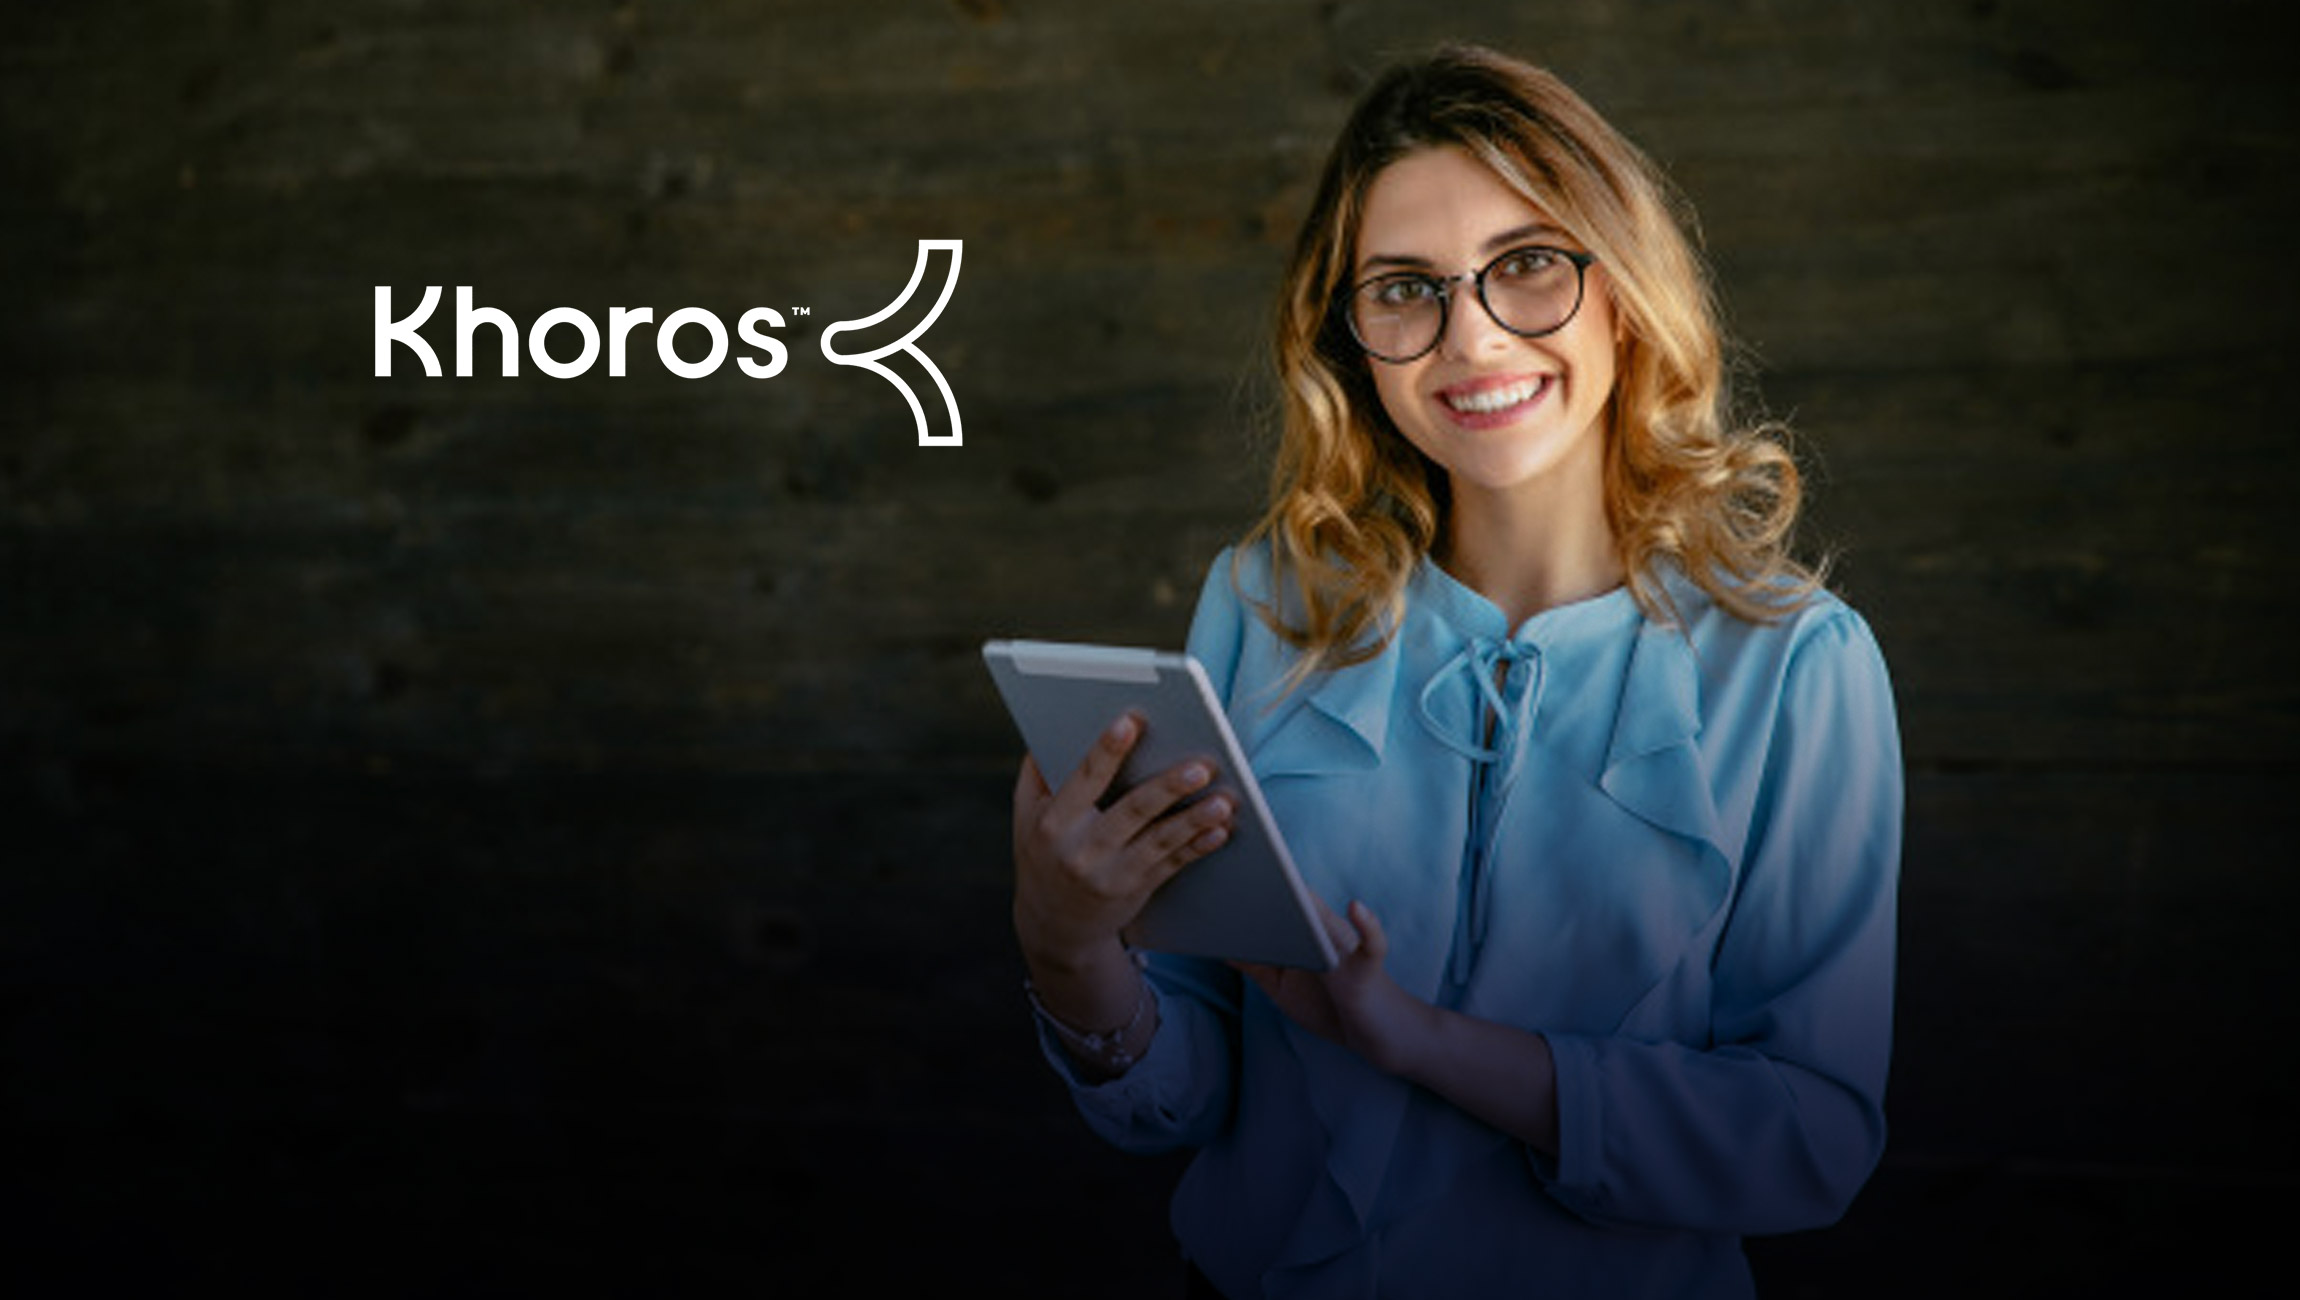 khoros-announces-the-launch-of-khoros-bot-to-improve-agent-efficiency